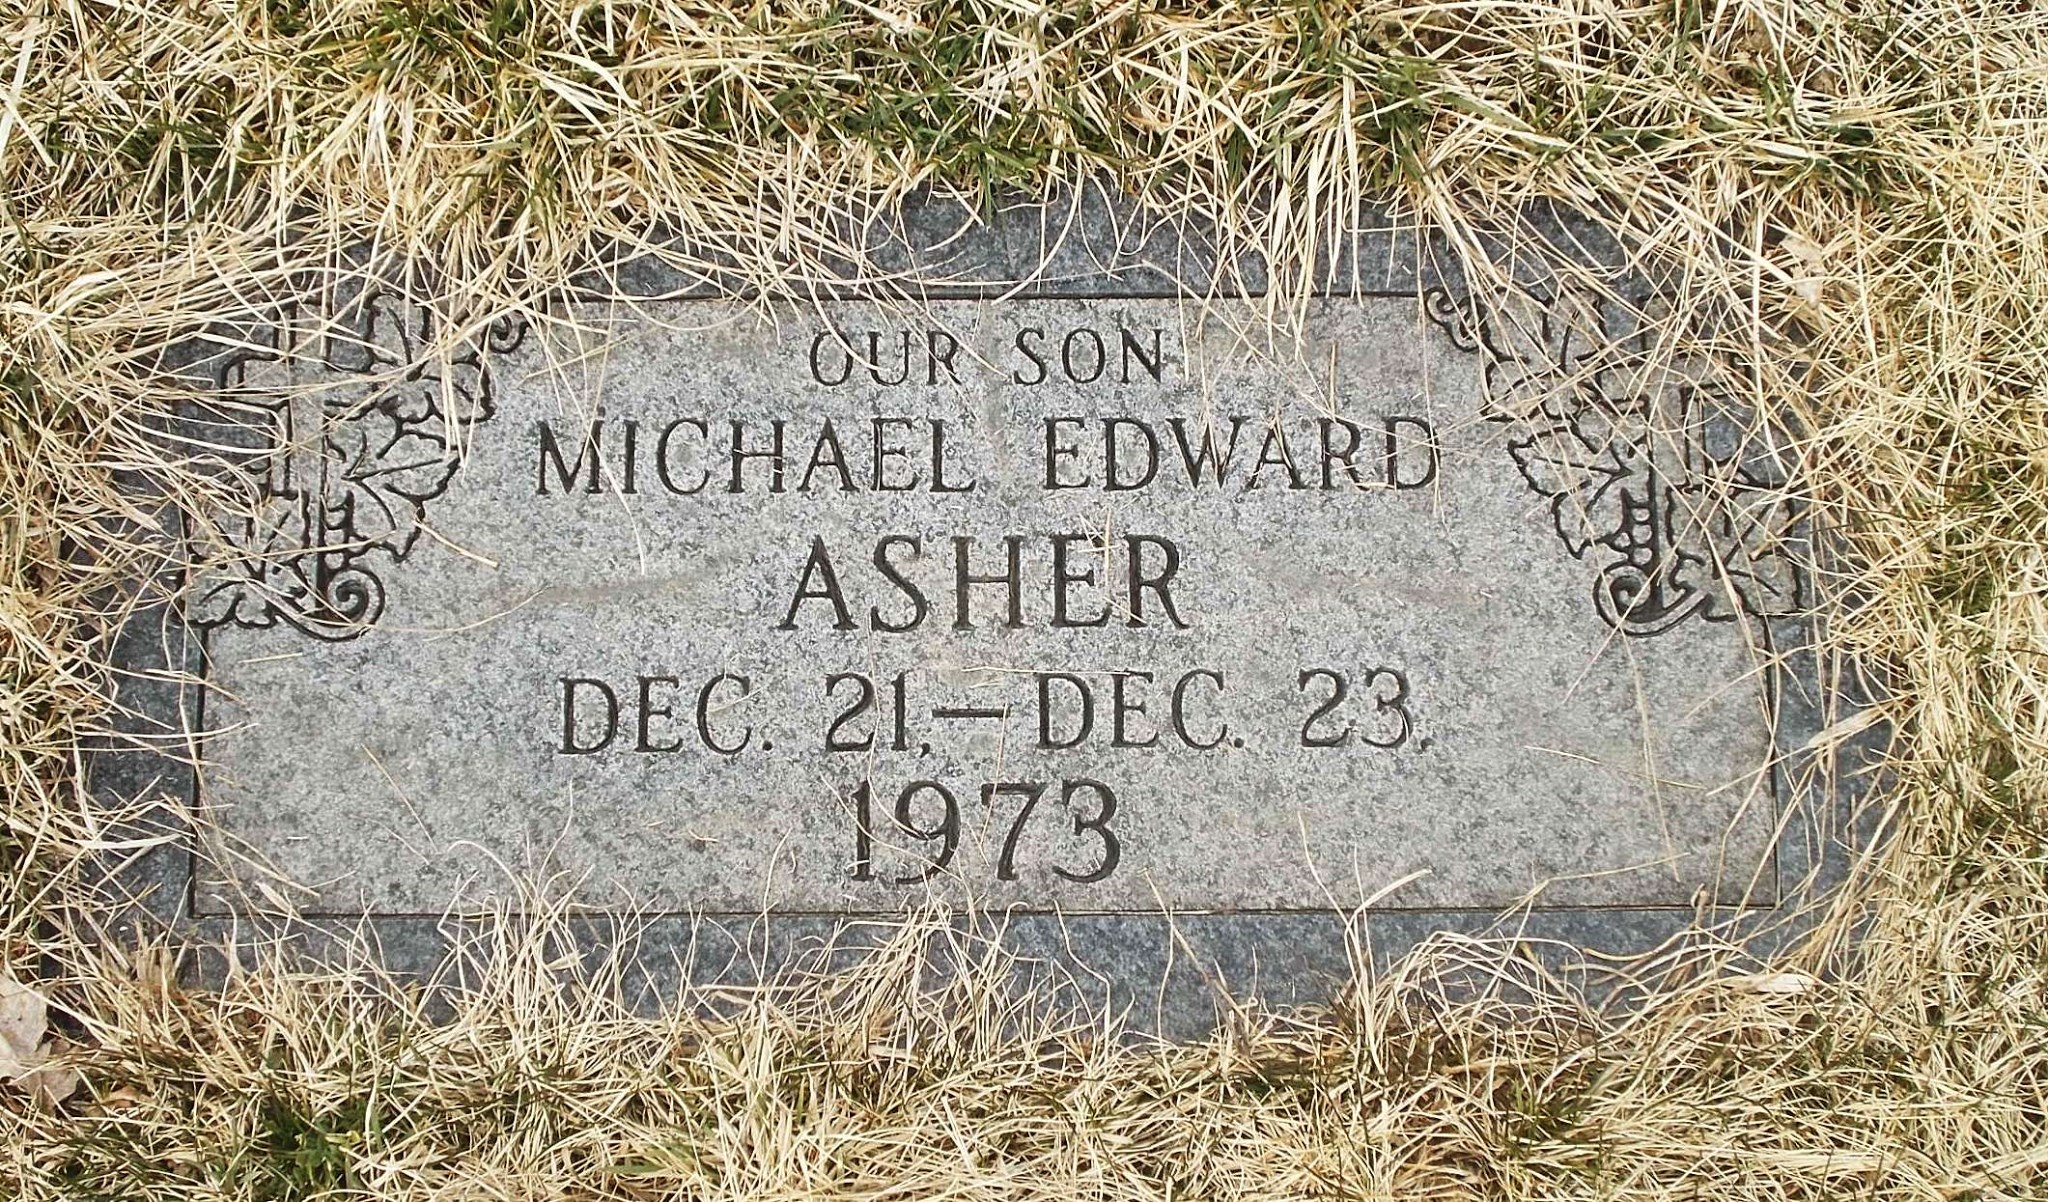 Michael Edward Asher